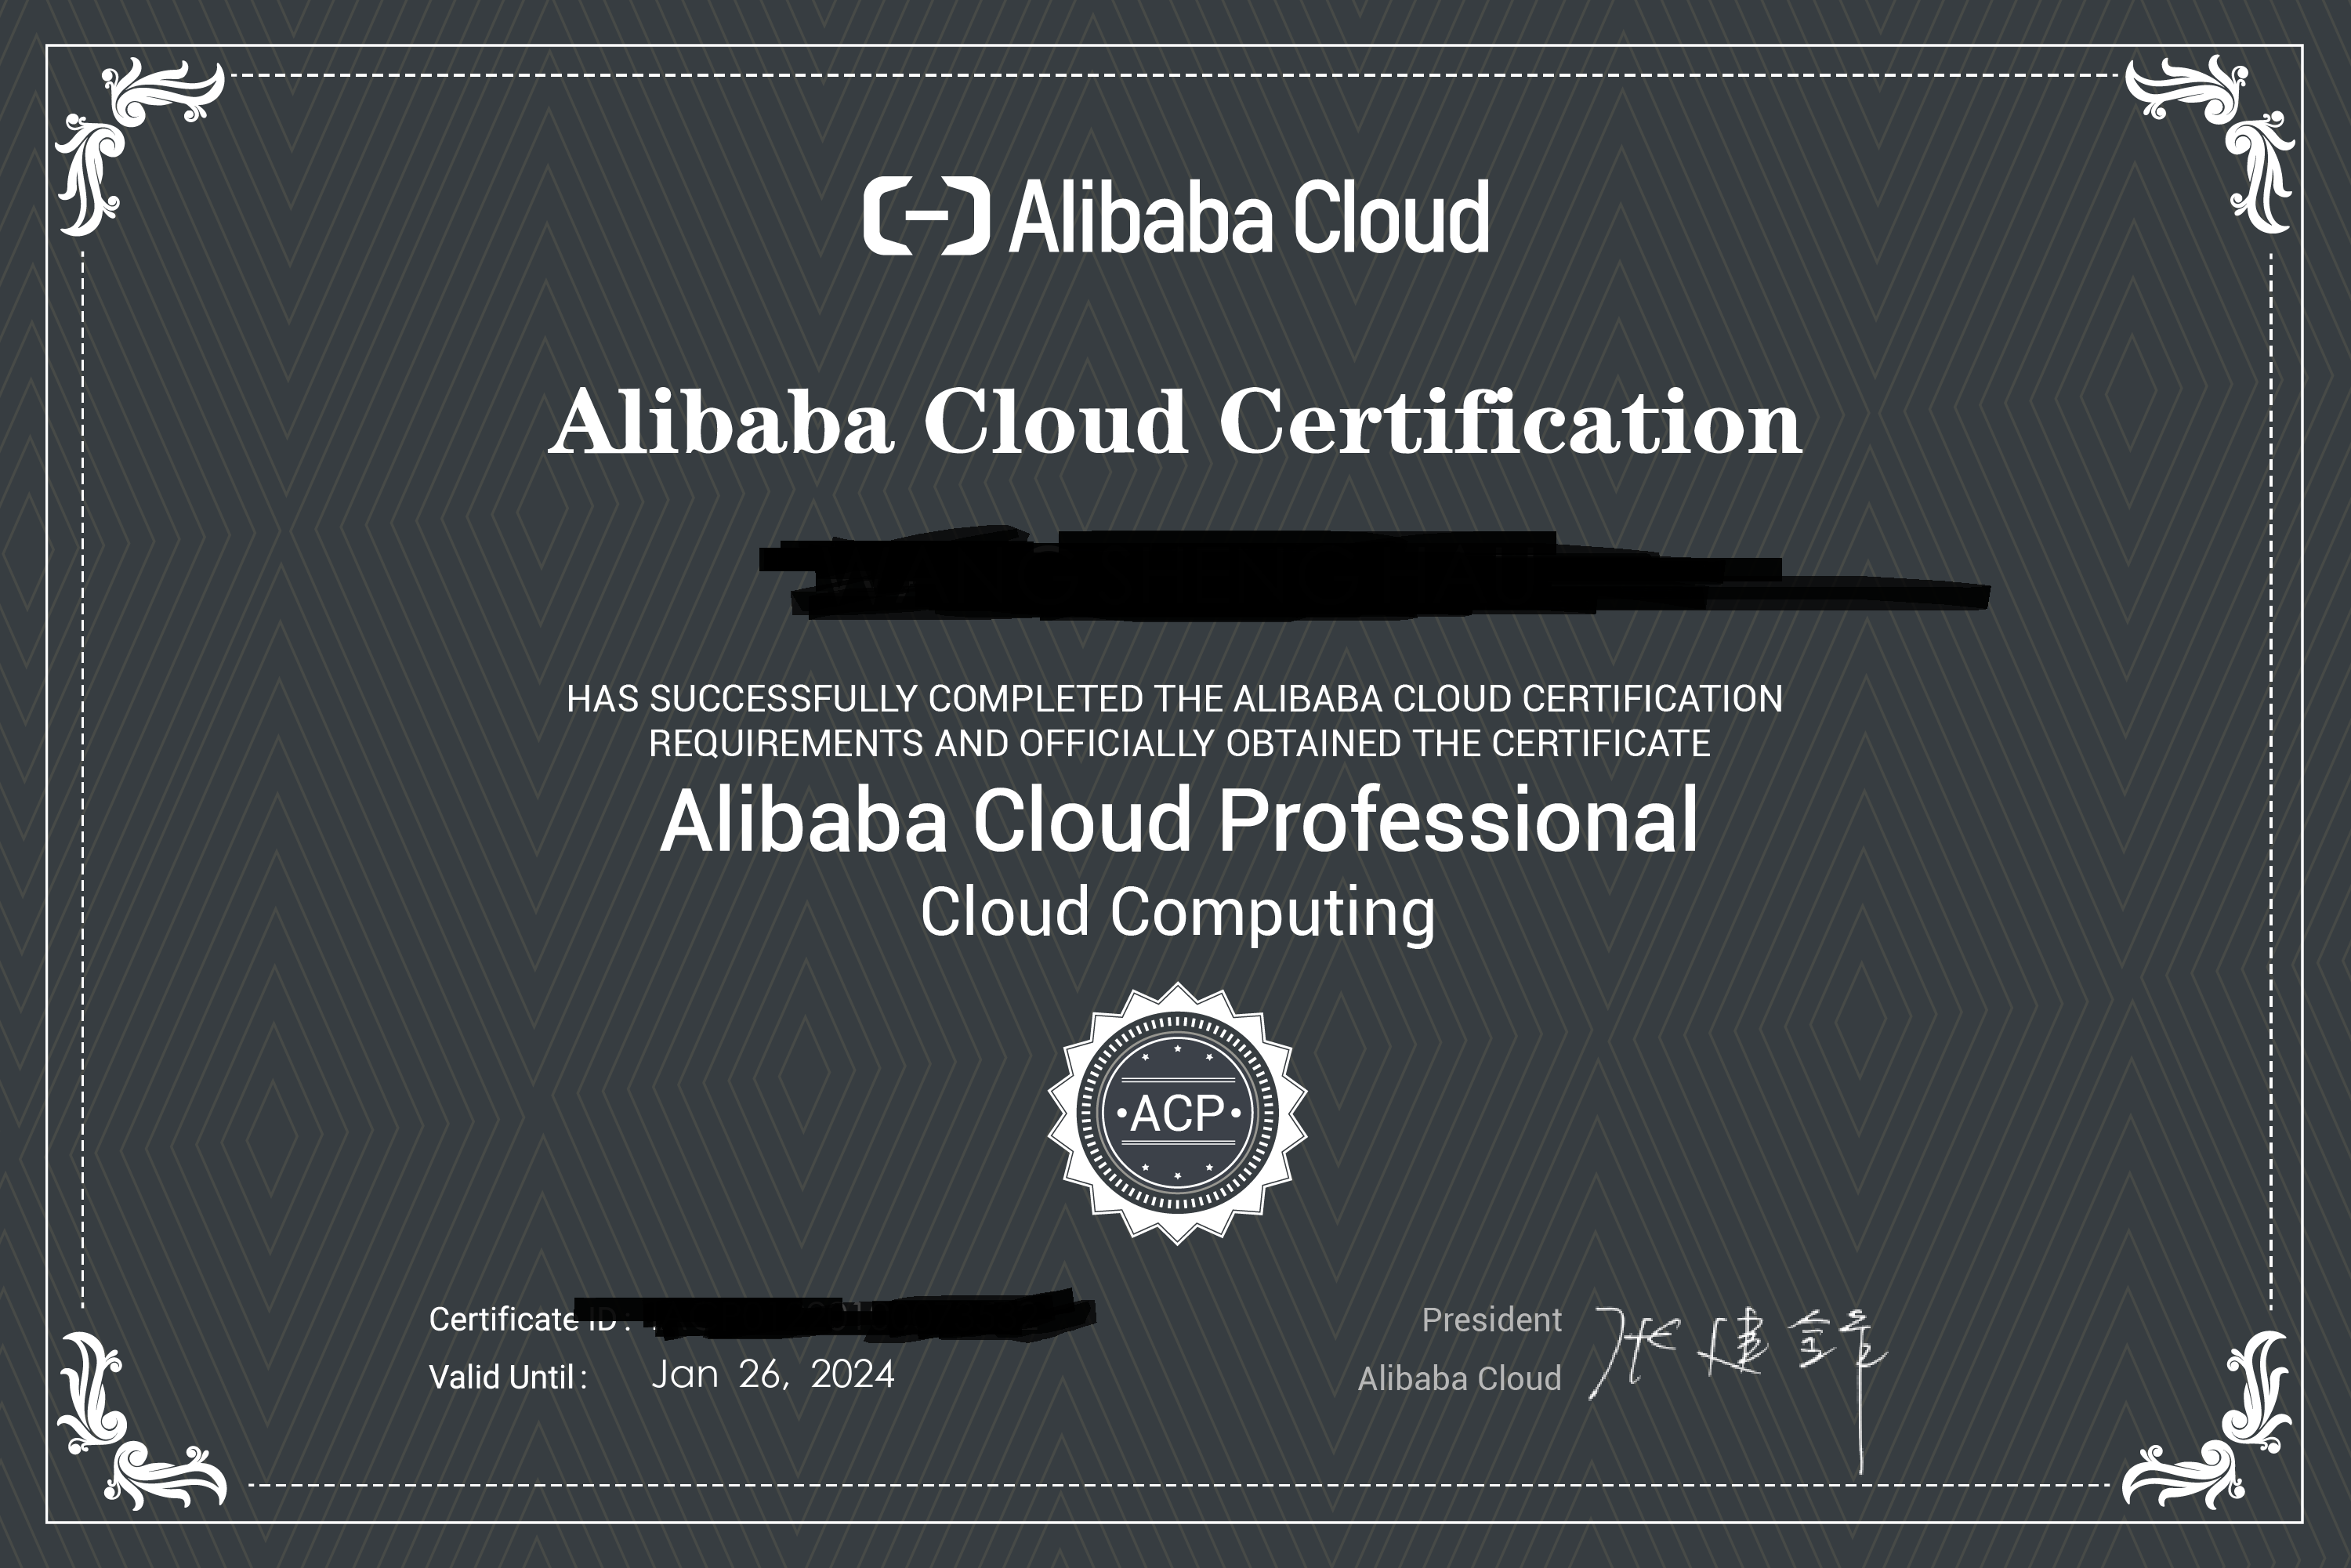 ACP-cloudcomputing.png